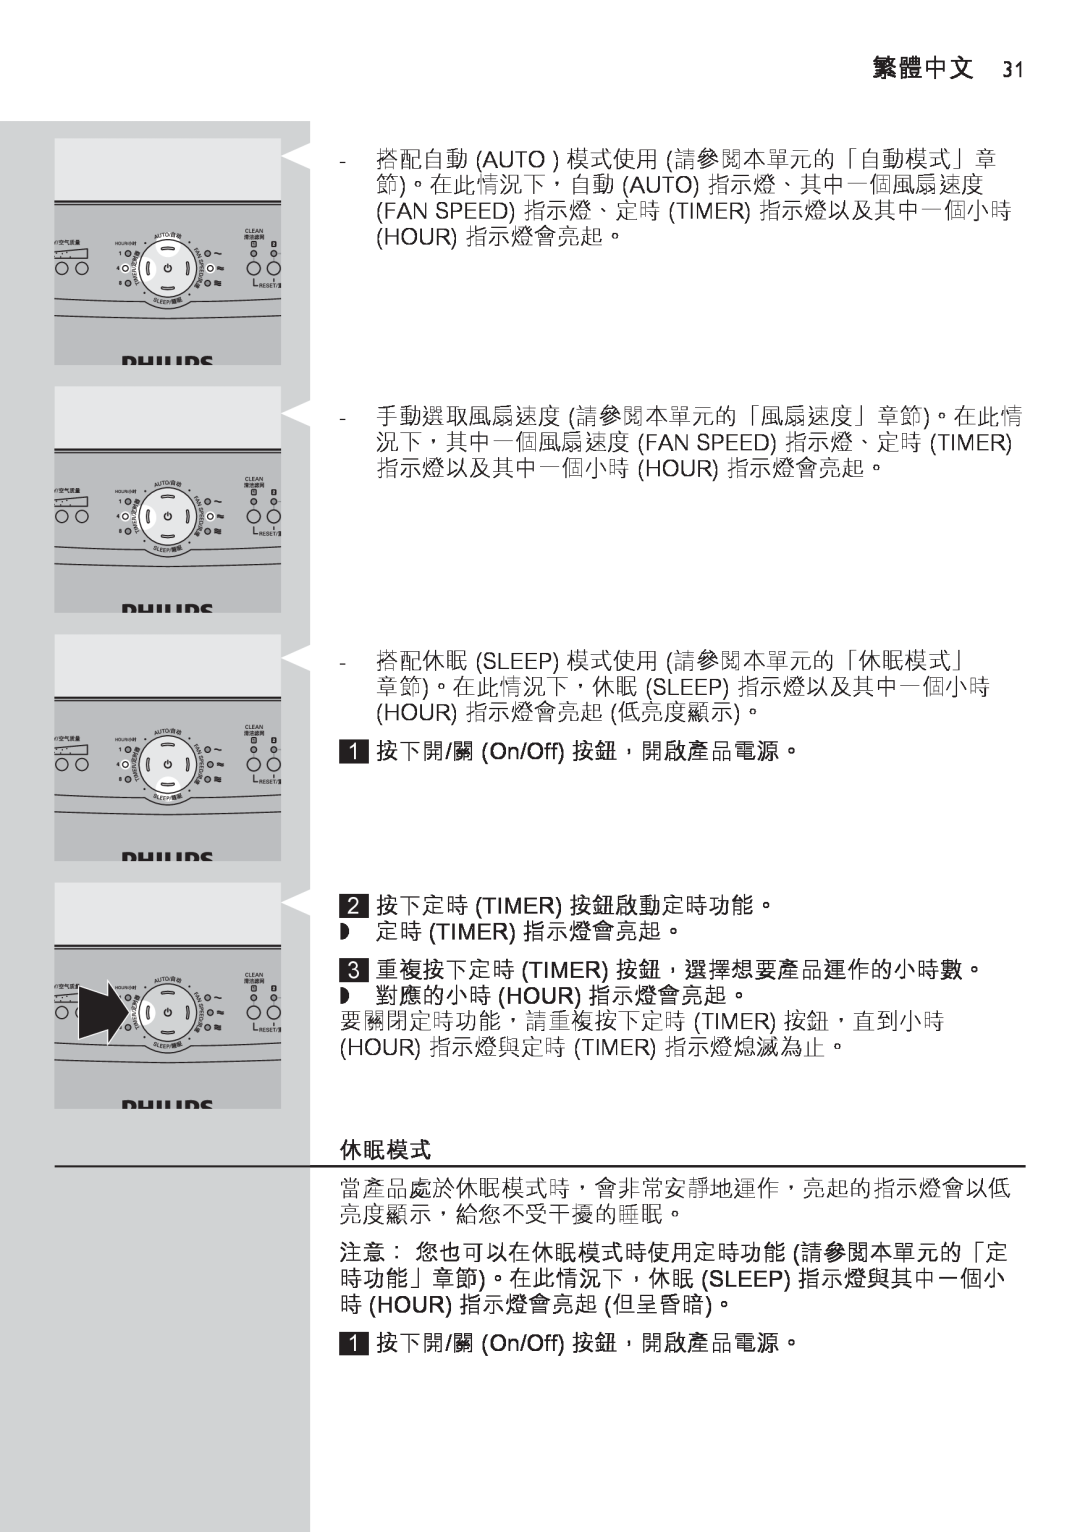 Philips AC4002 manual 休眠模式, 繁體中文, 定時 Timer 指示燈會亮起。 